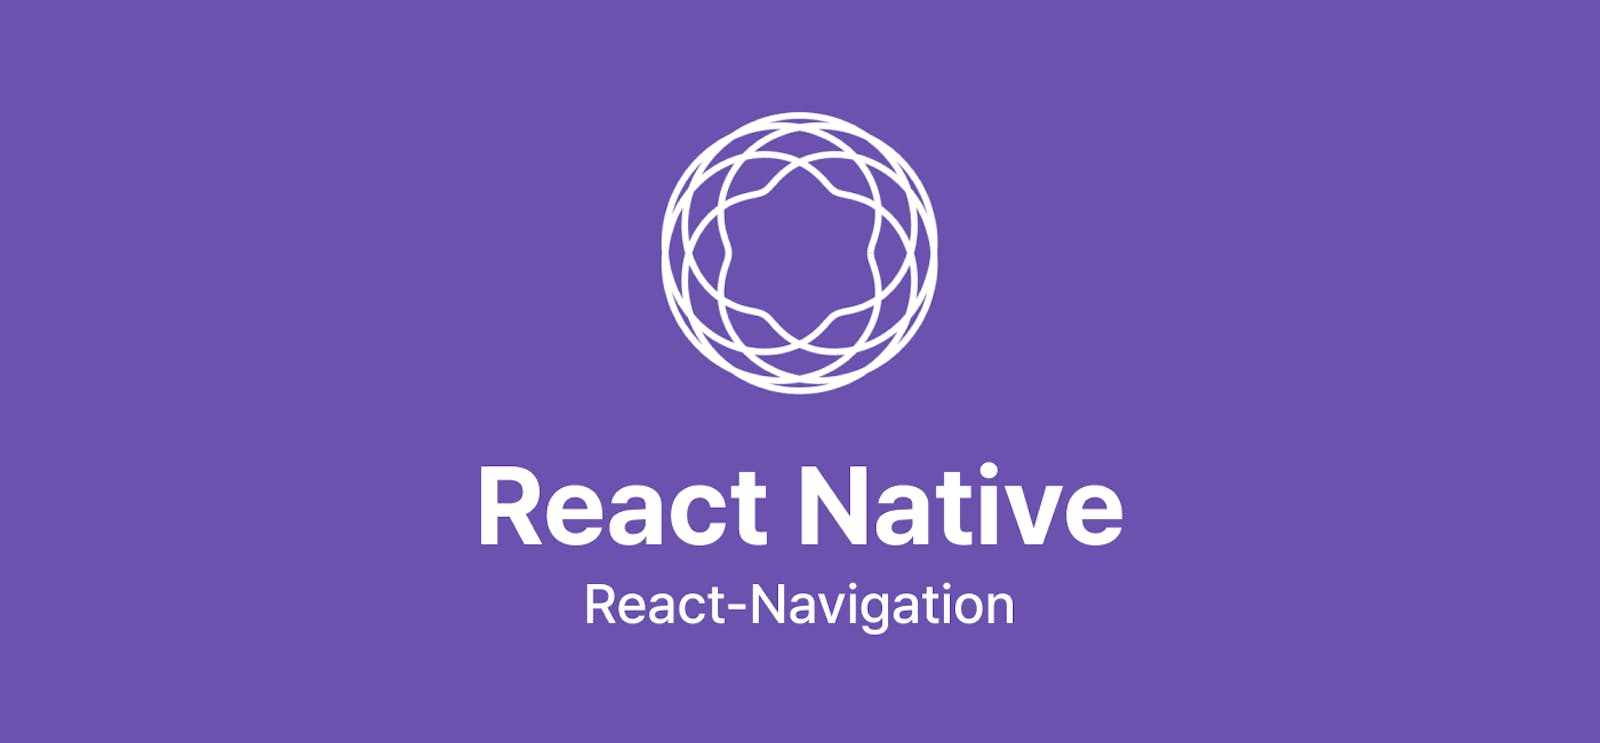 React-Navigation in React-Native